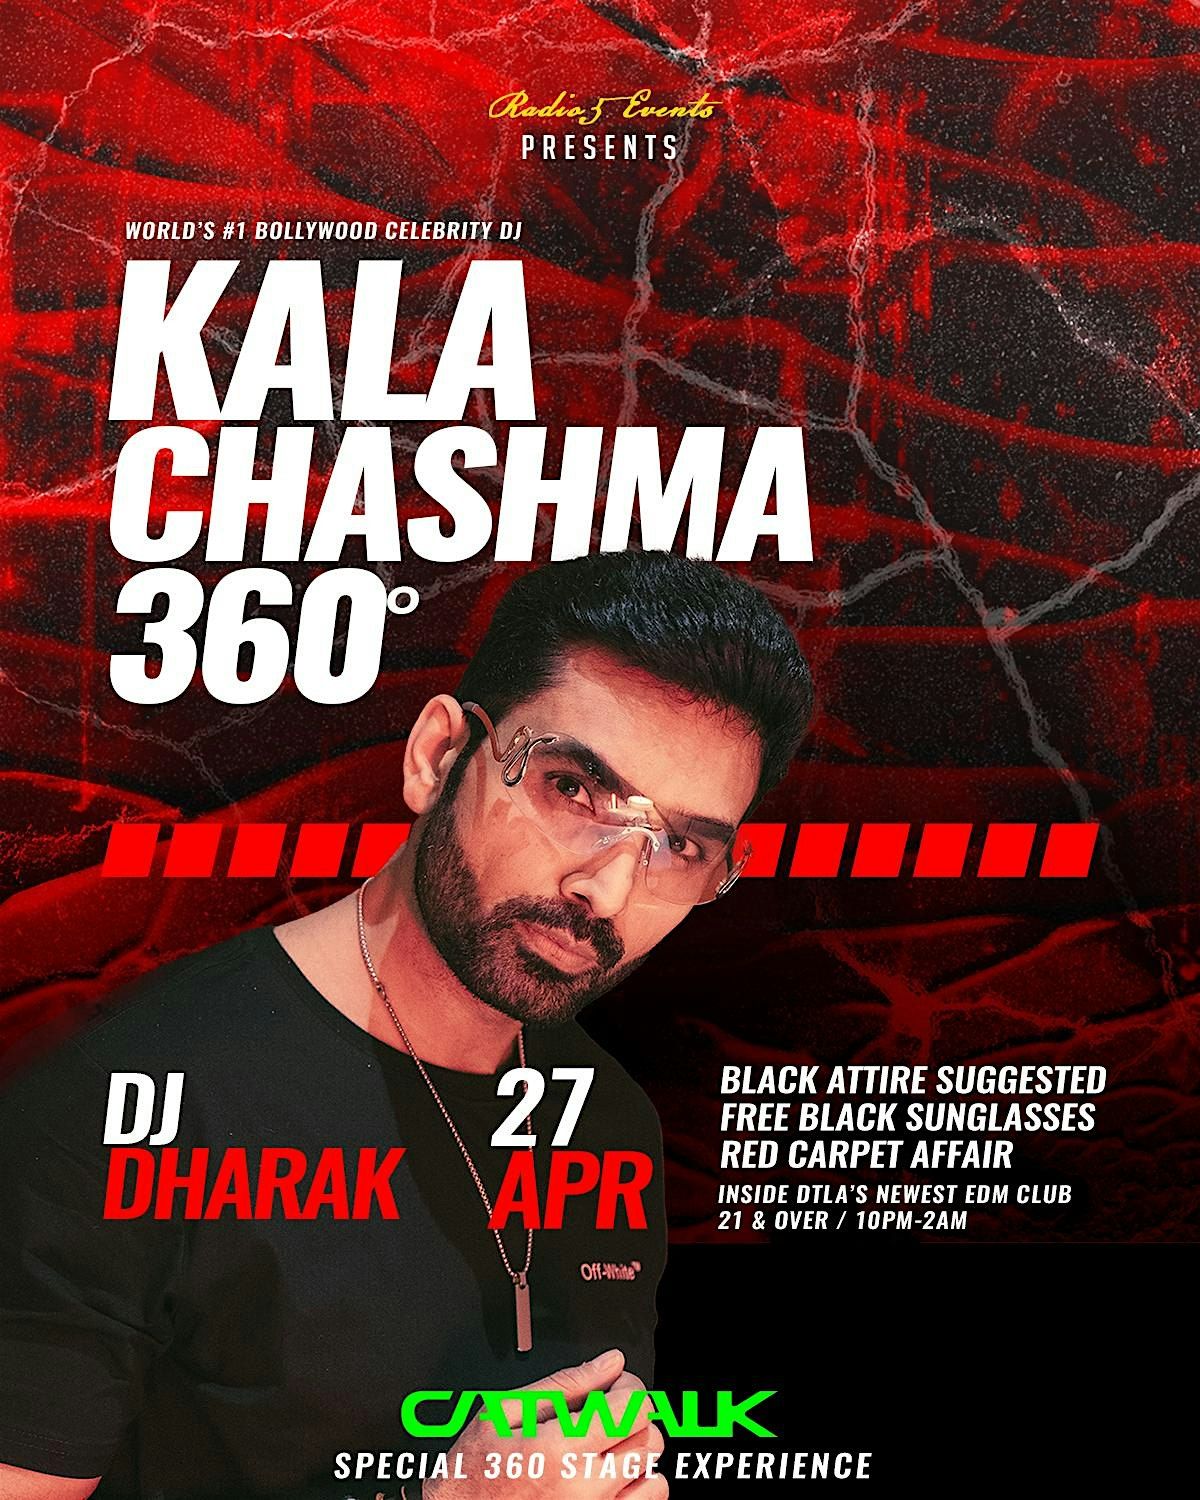 Bollywood Blackout with India's #1 Celebrity DJ DHARAK - All BLACK Affair!